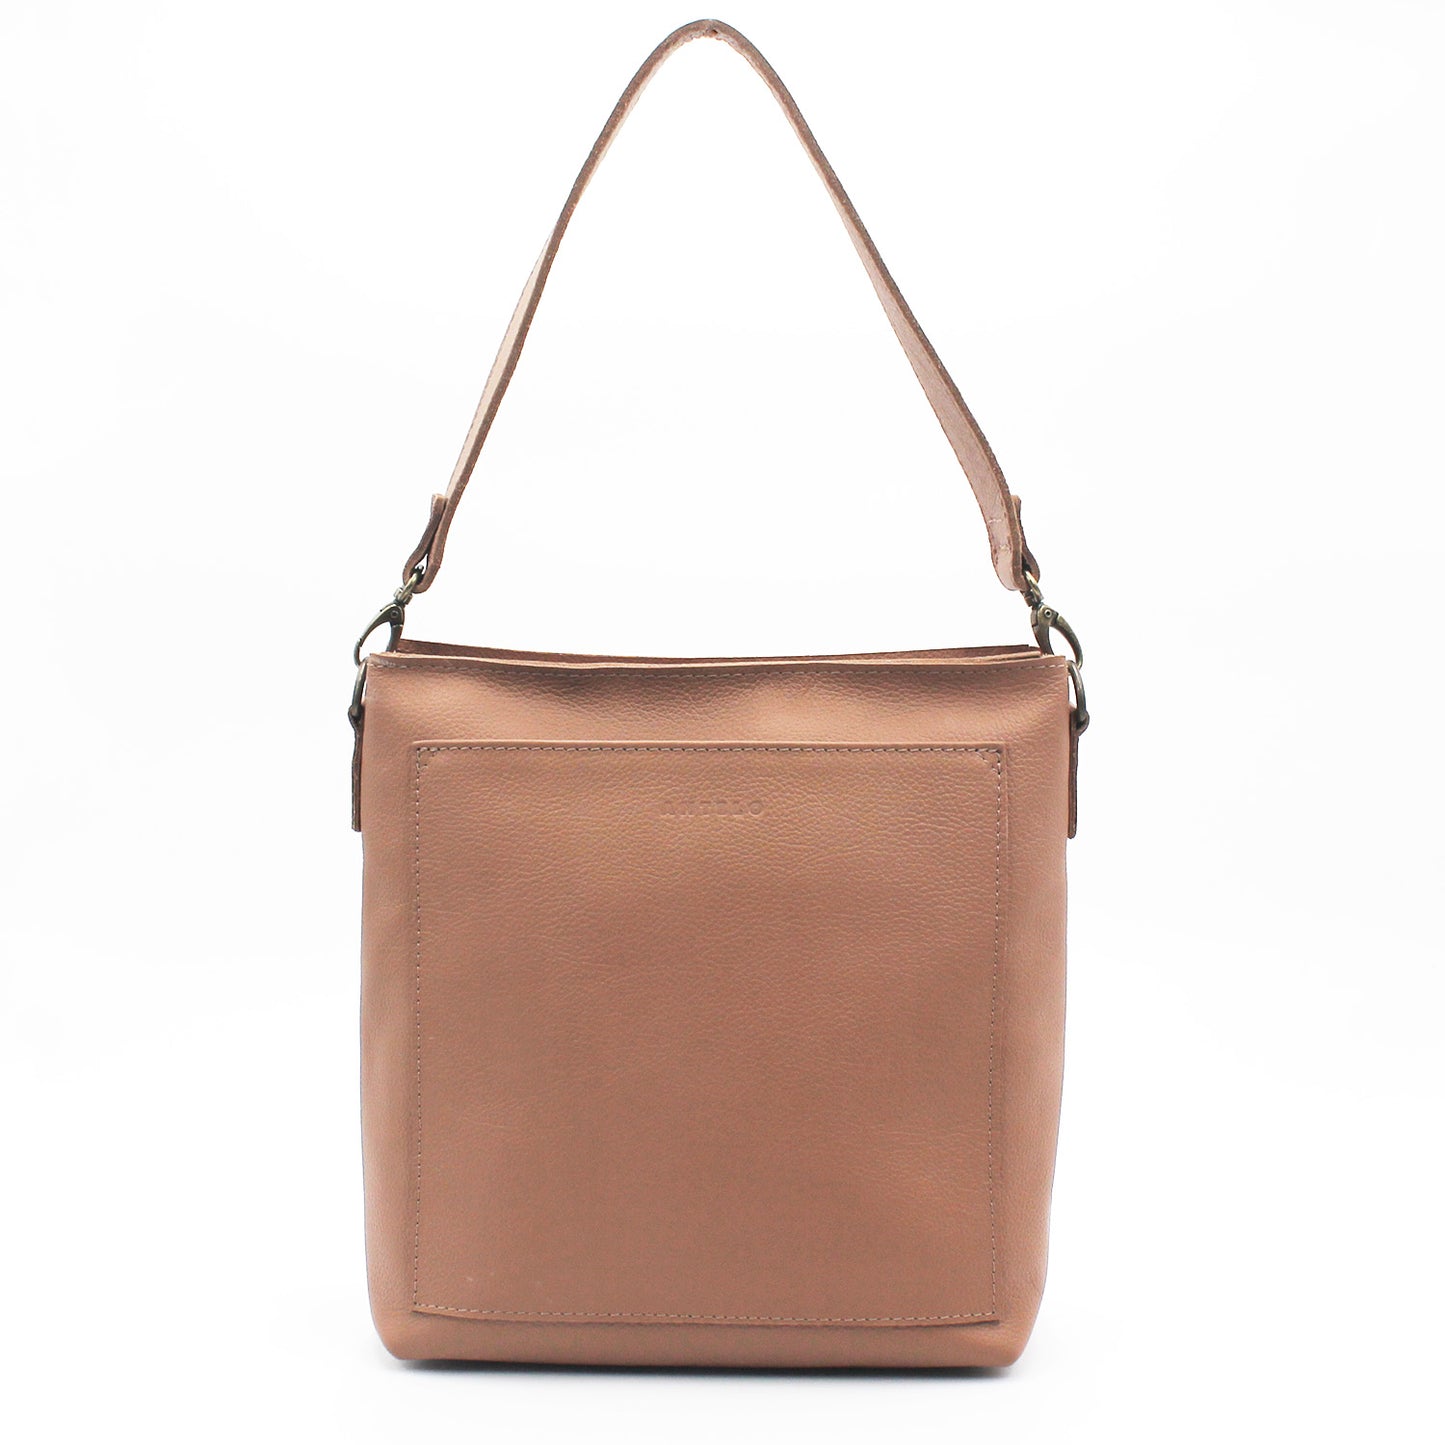 Josie Prism Leather Shoulder Bag with Sling - MINOR FLAW